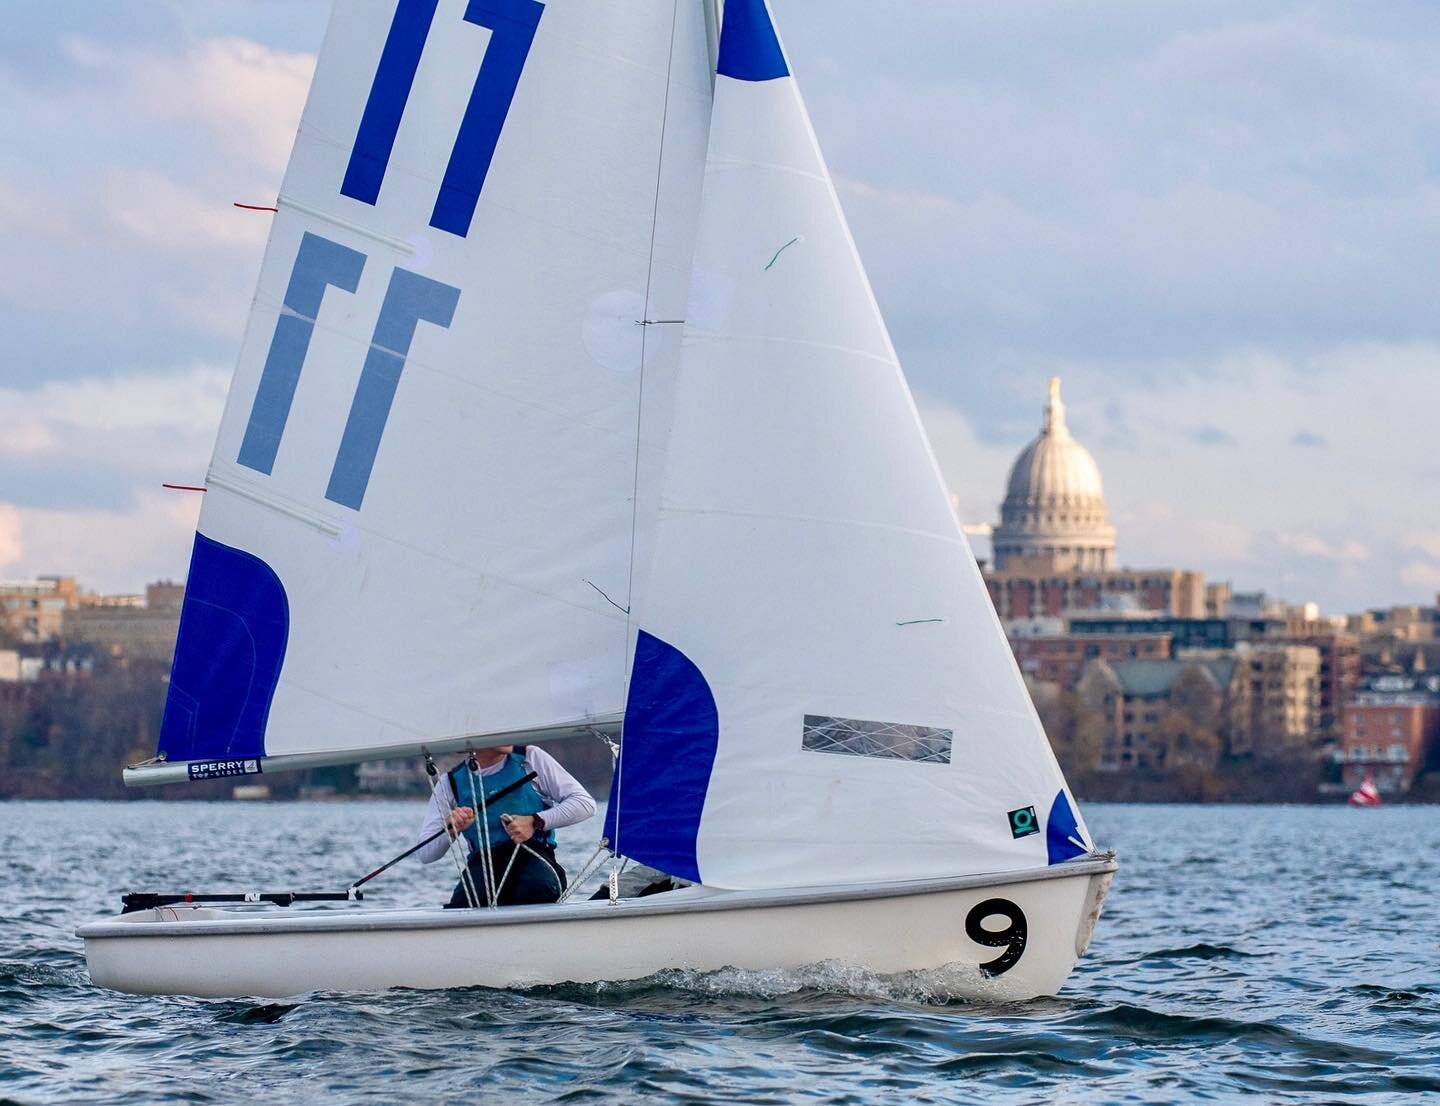 New FJ sails by @quantumsails looking reallllll nice